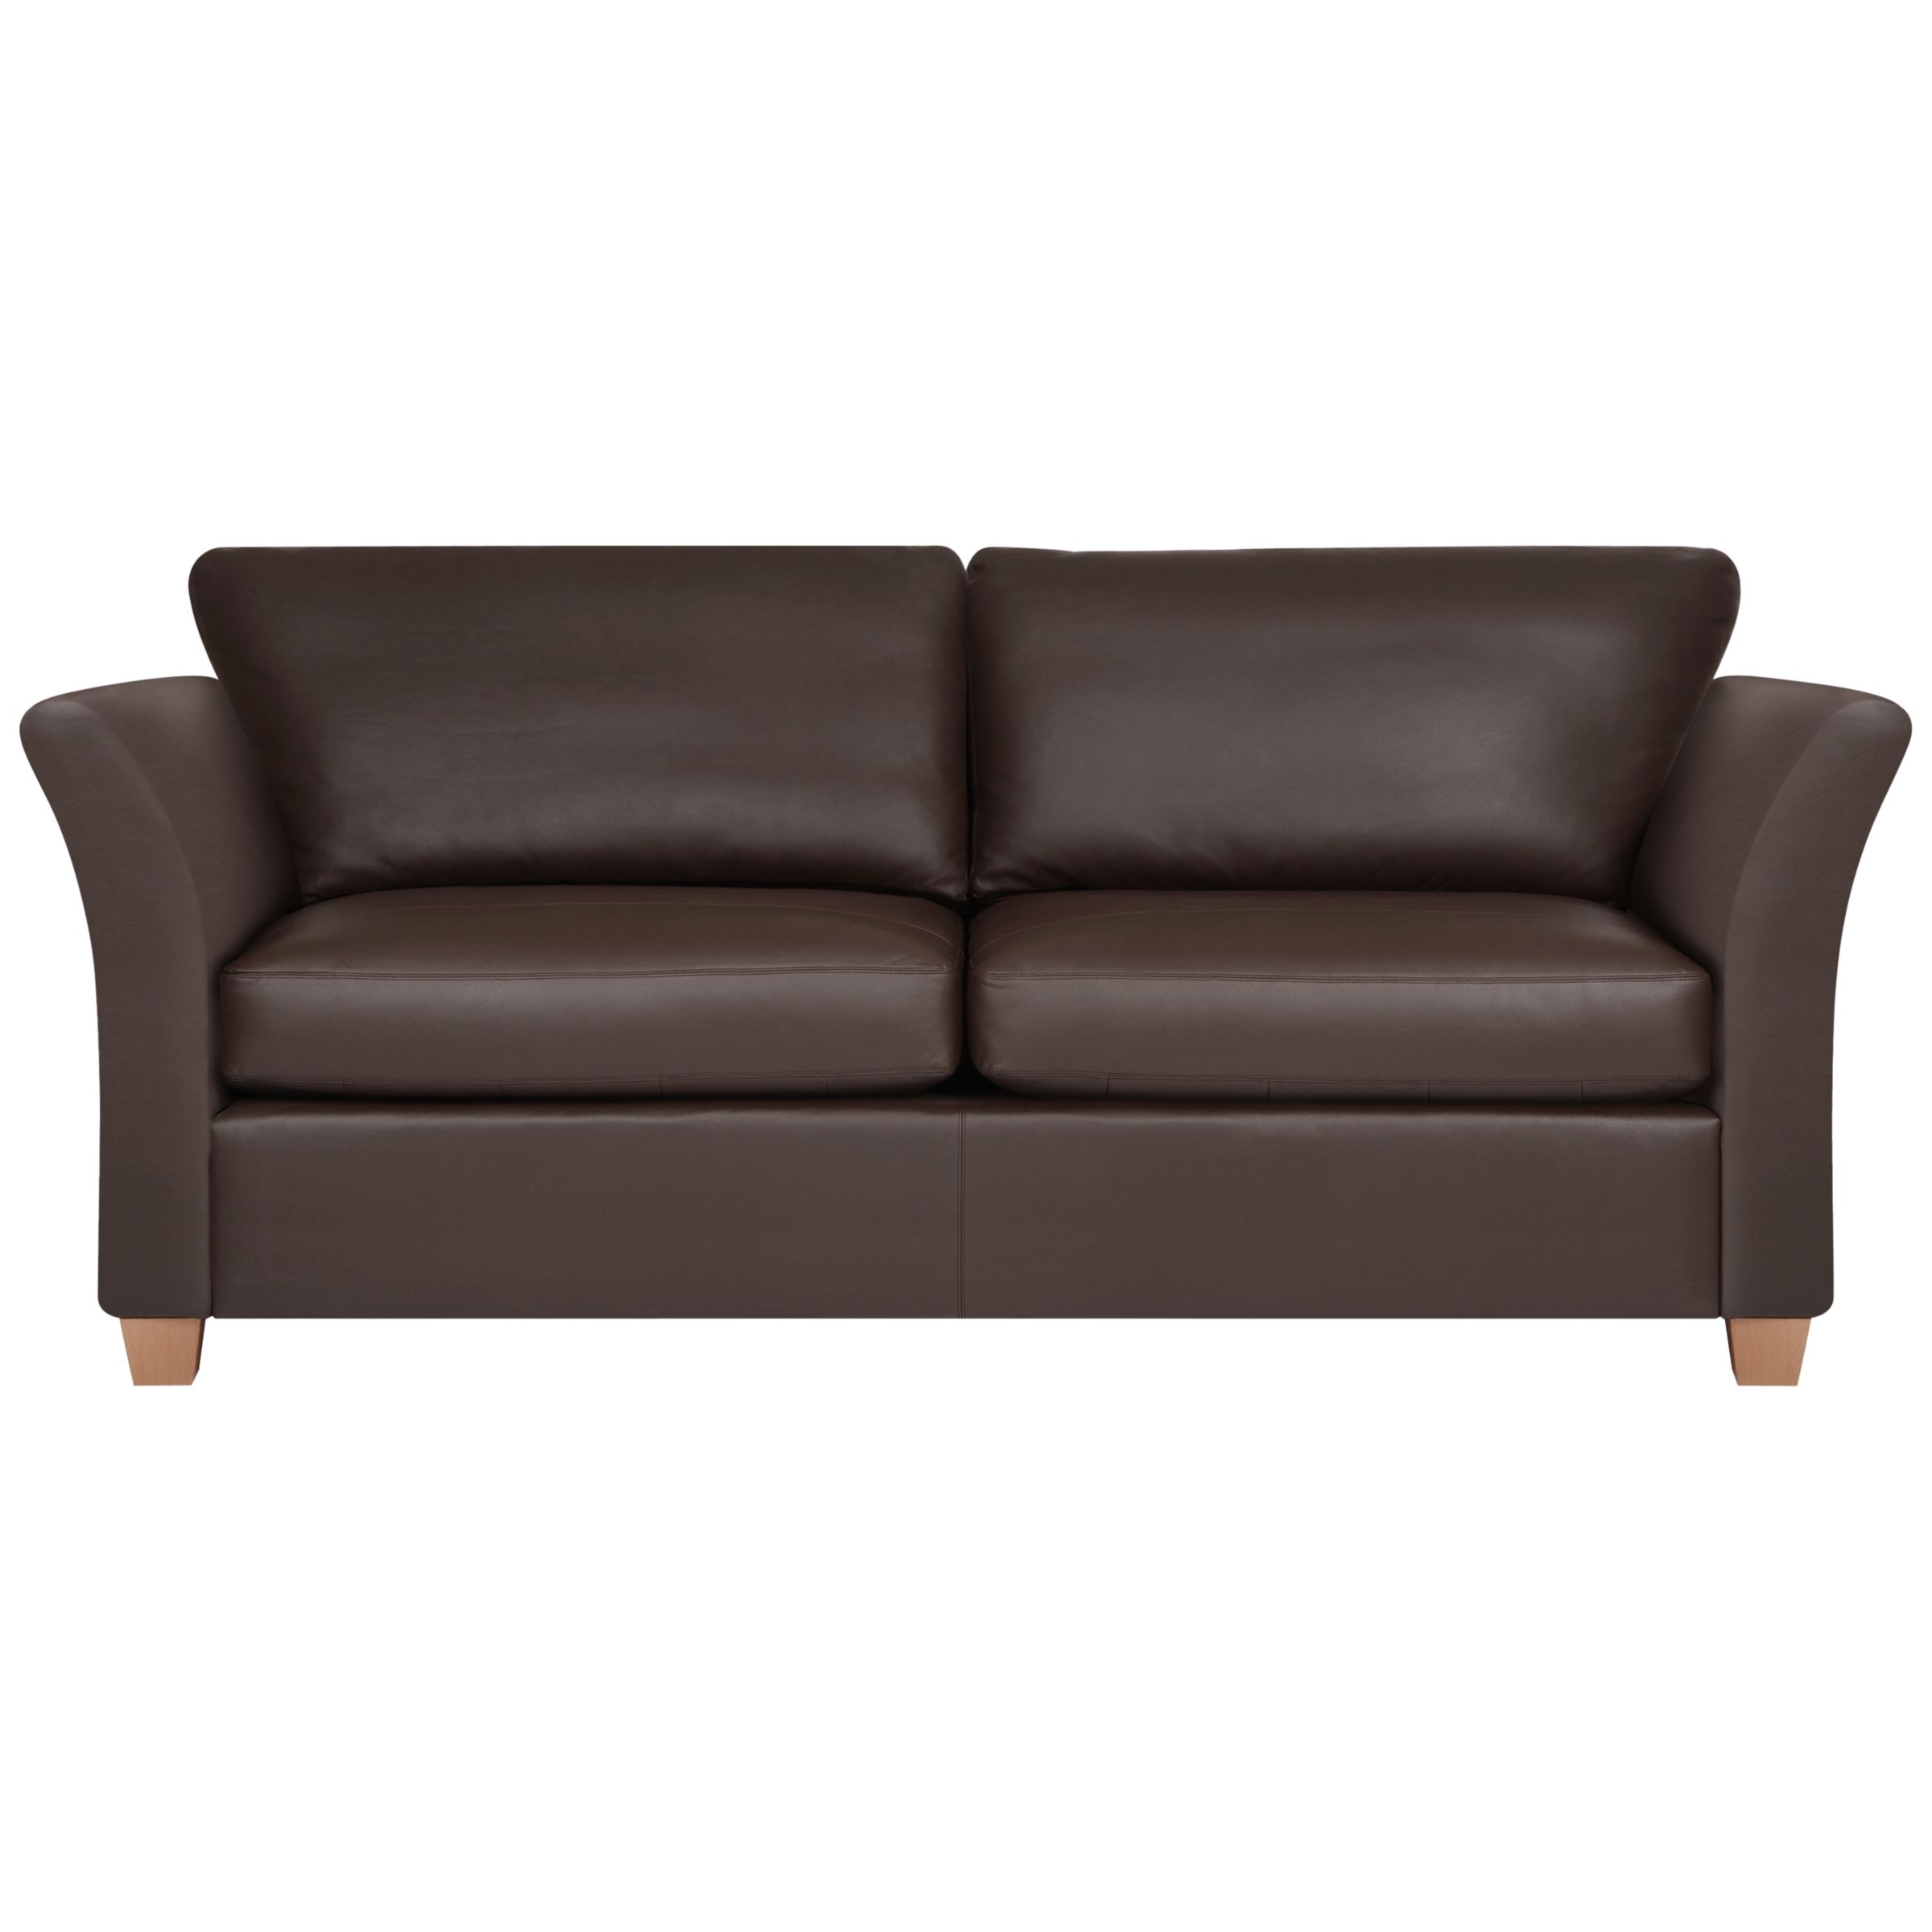 John Lewis Options Flare Arm Large Sofa, Oltan Leather, Chocolate, width 200cm